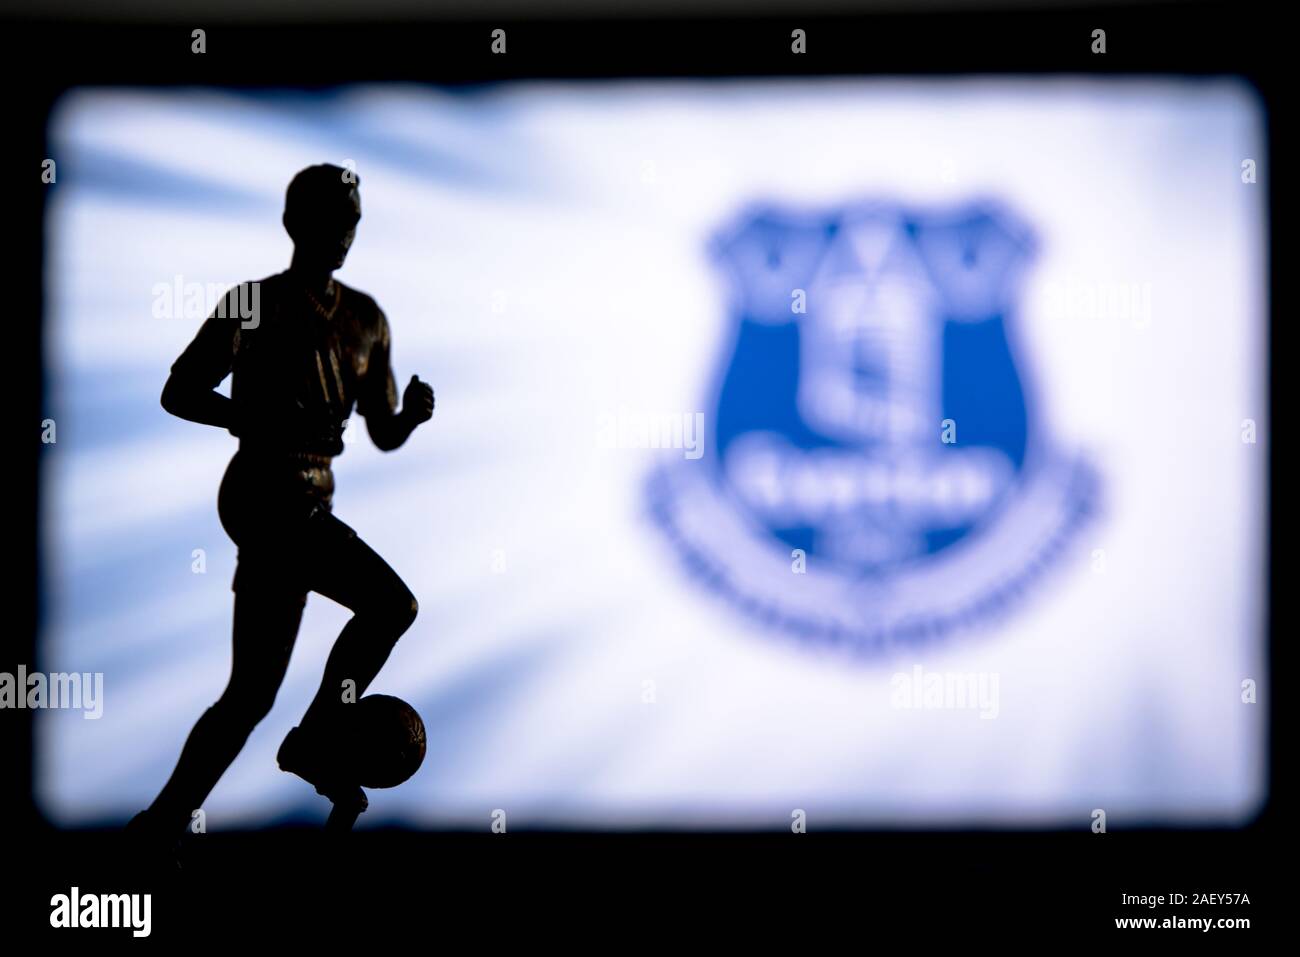 LONDON, ENGLAND, JULY. 1. 2019: Everton Football club logo, Premier League, England. Soccer player silhouette. Stock Photo